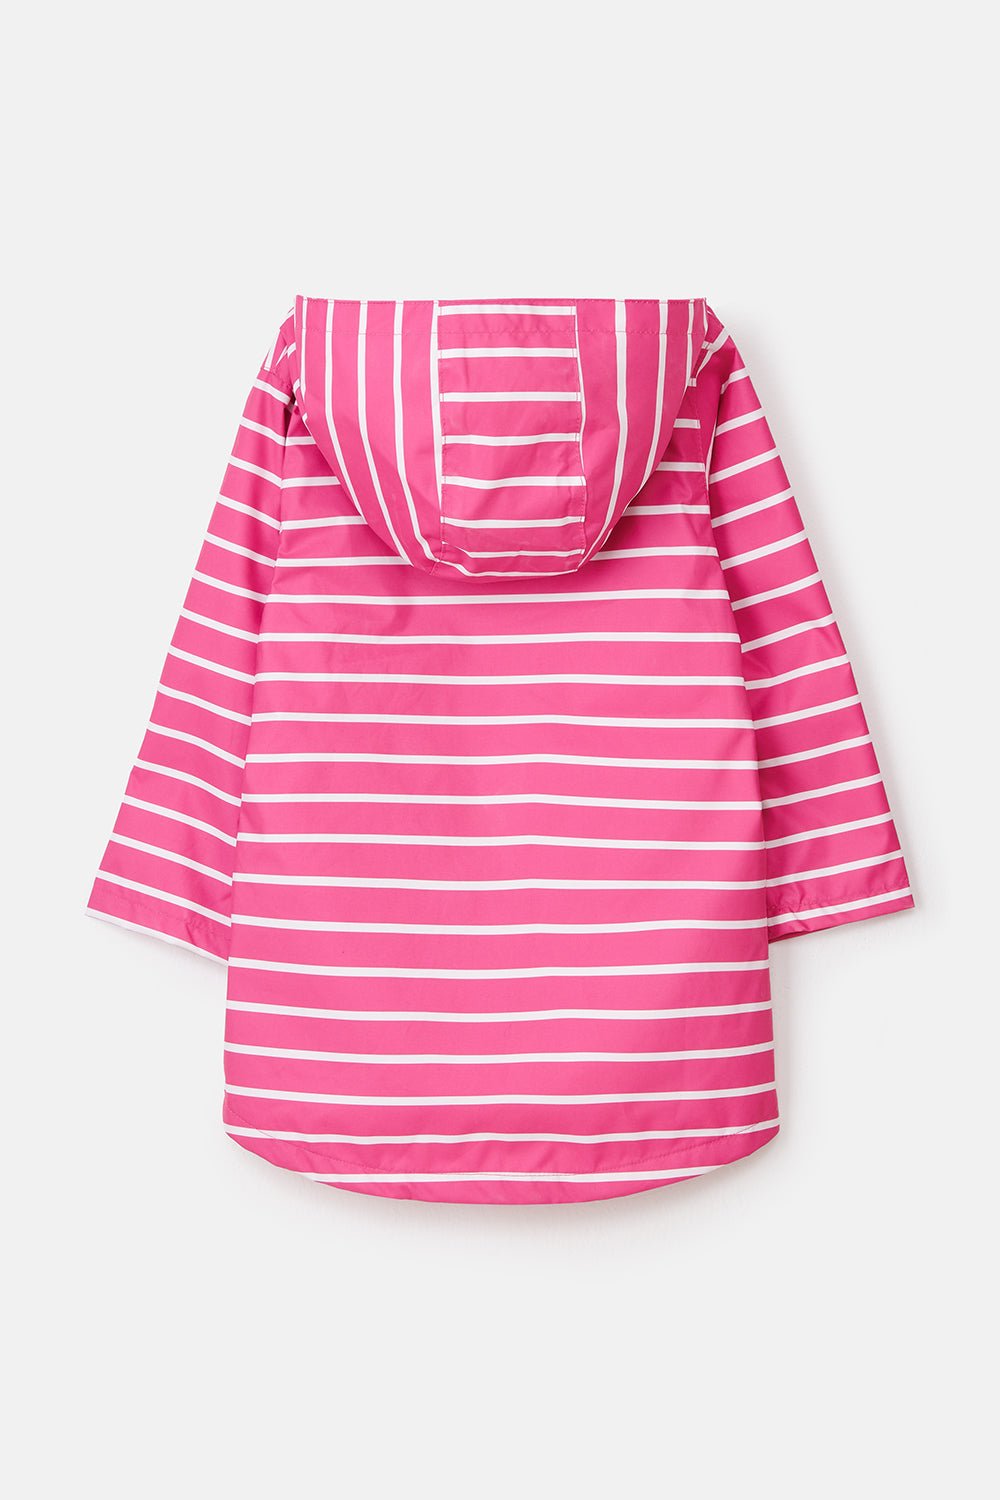 Olivia girls' rainjacket, Bright Pink Stripe